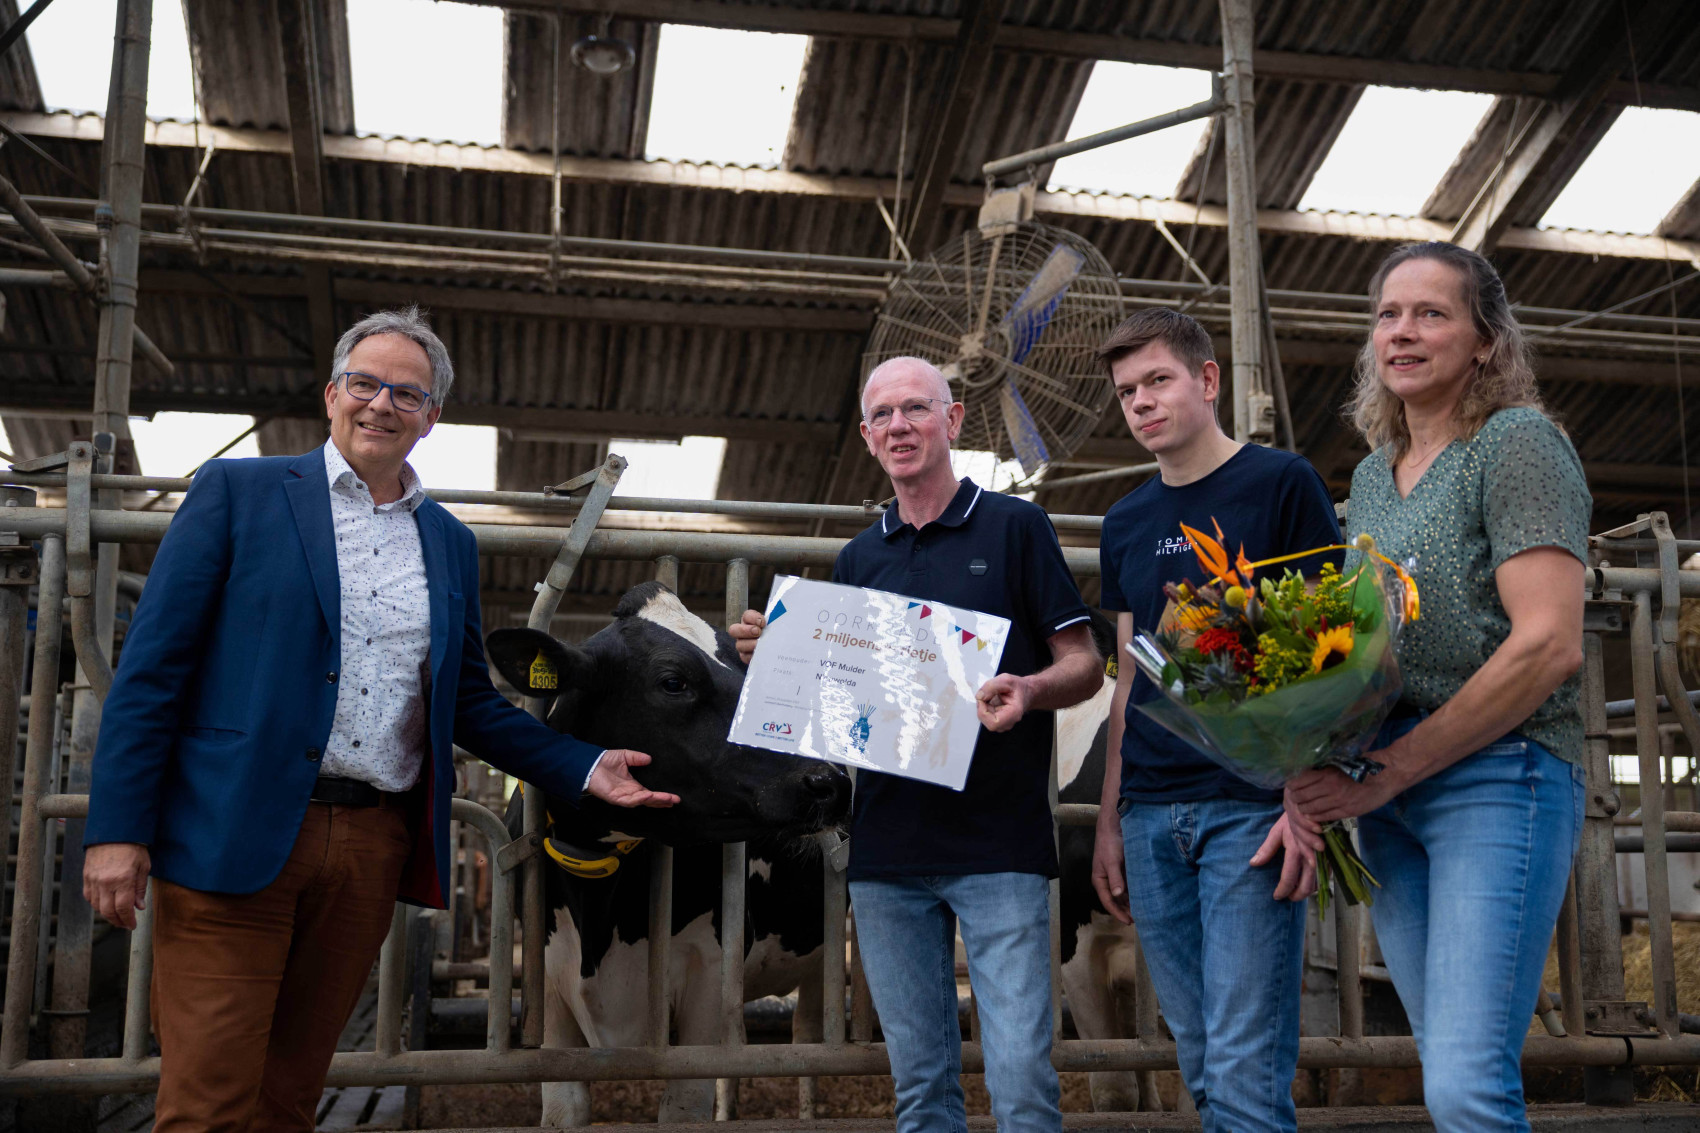 Director CRV and farmers in a barn celebration 2 mlnth. straw semen